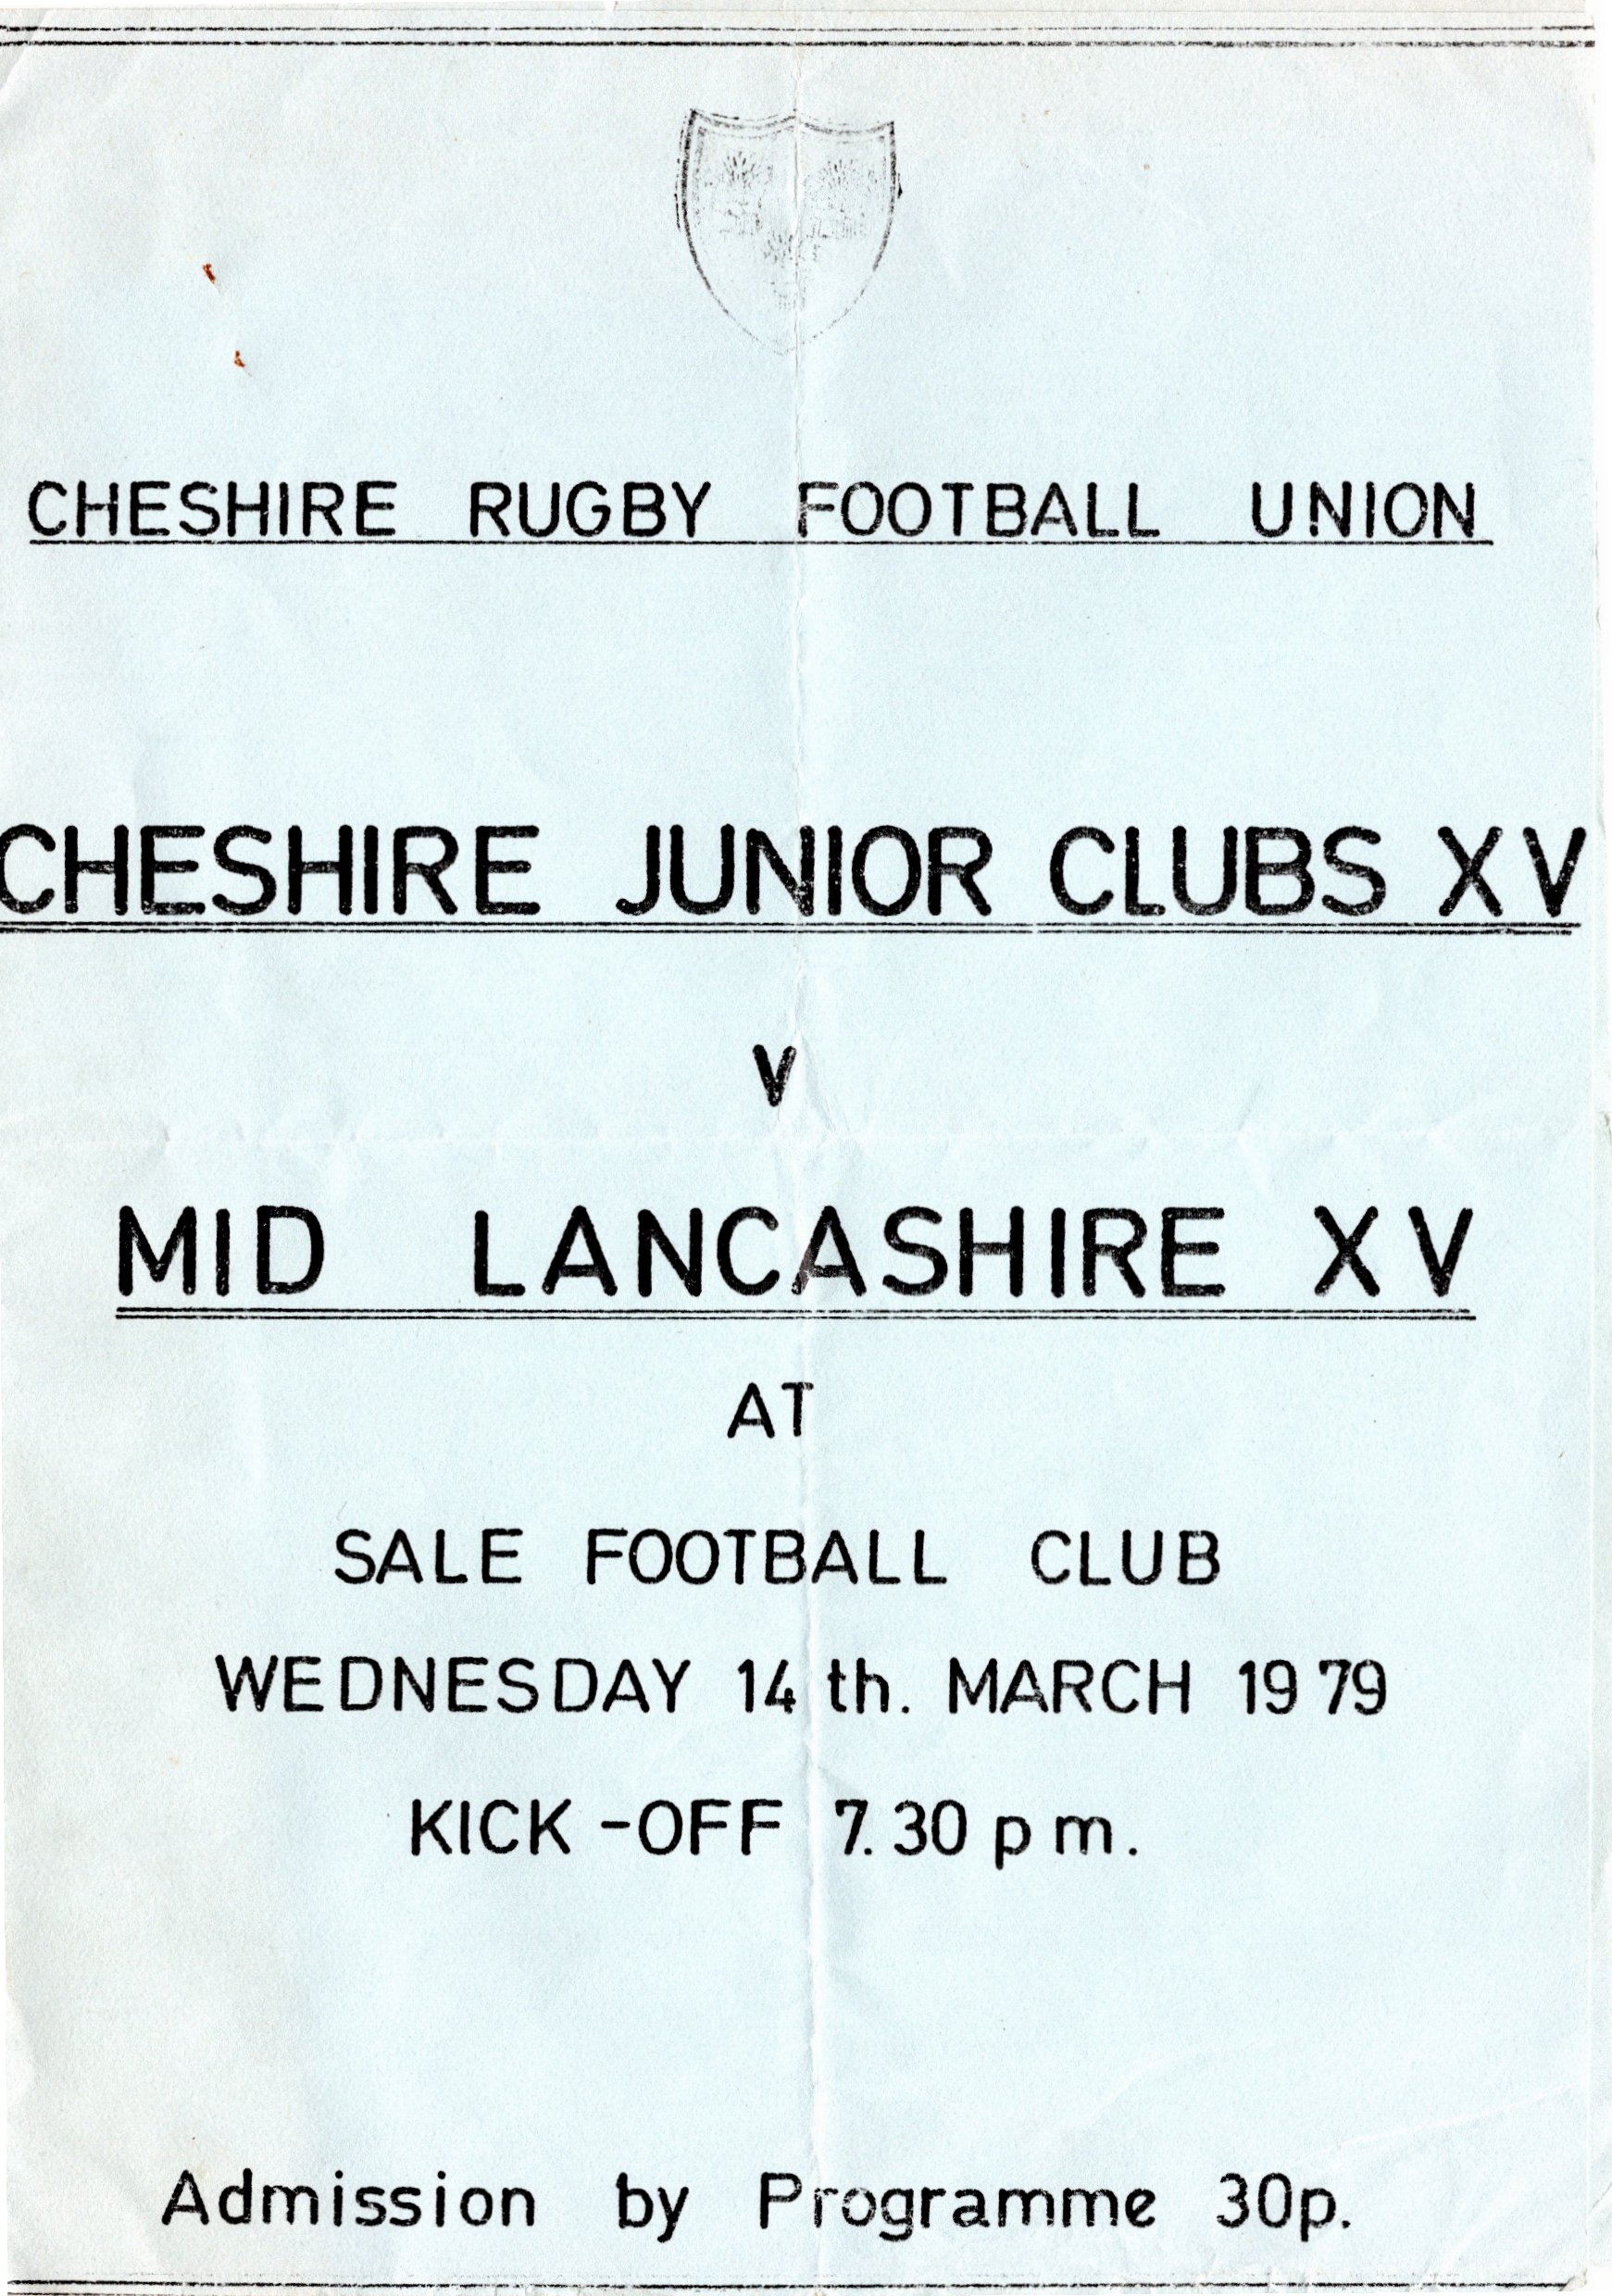 Old Instonians RUFC, 1979 Cheshire RFU, Cheshire Junior Clubs v Mid Lancs